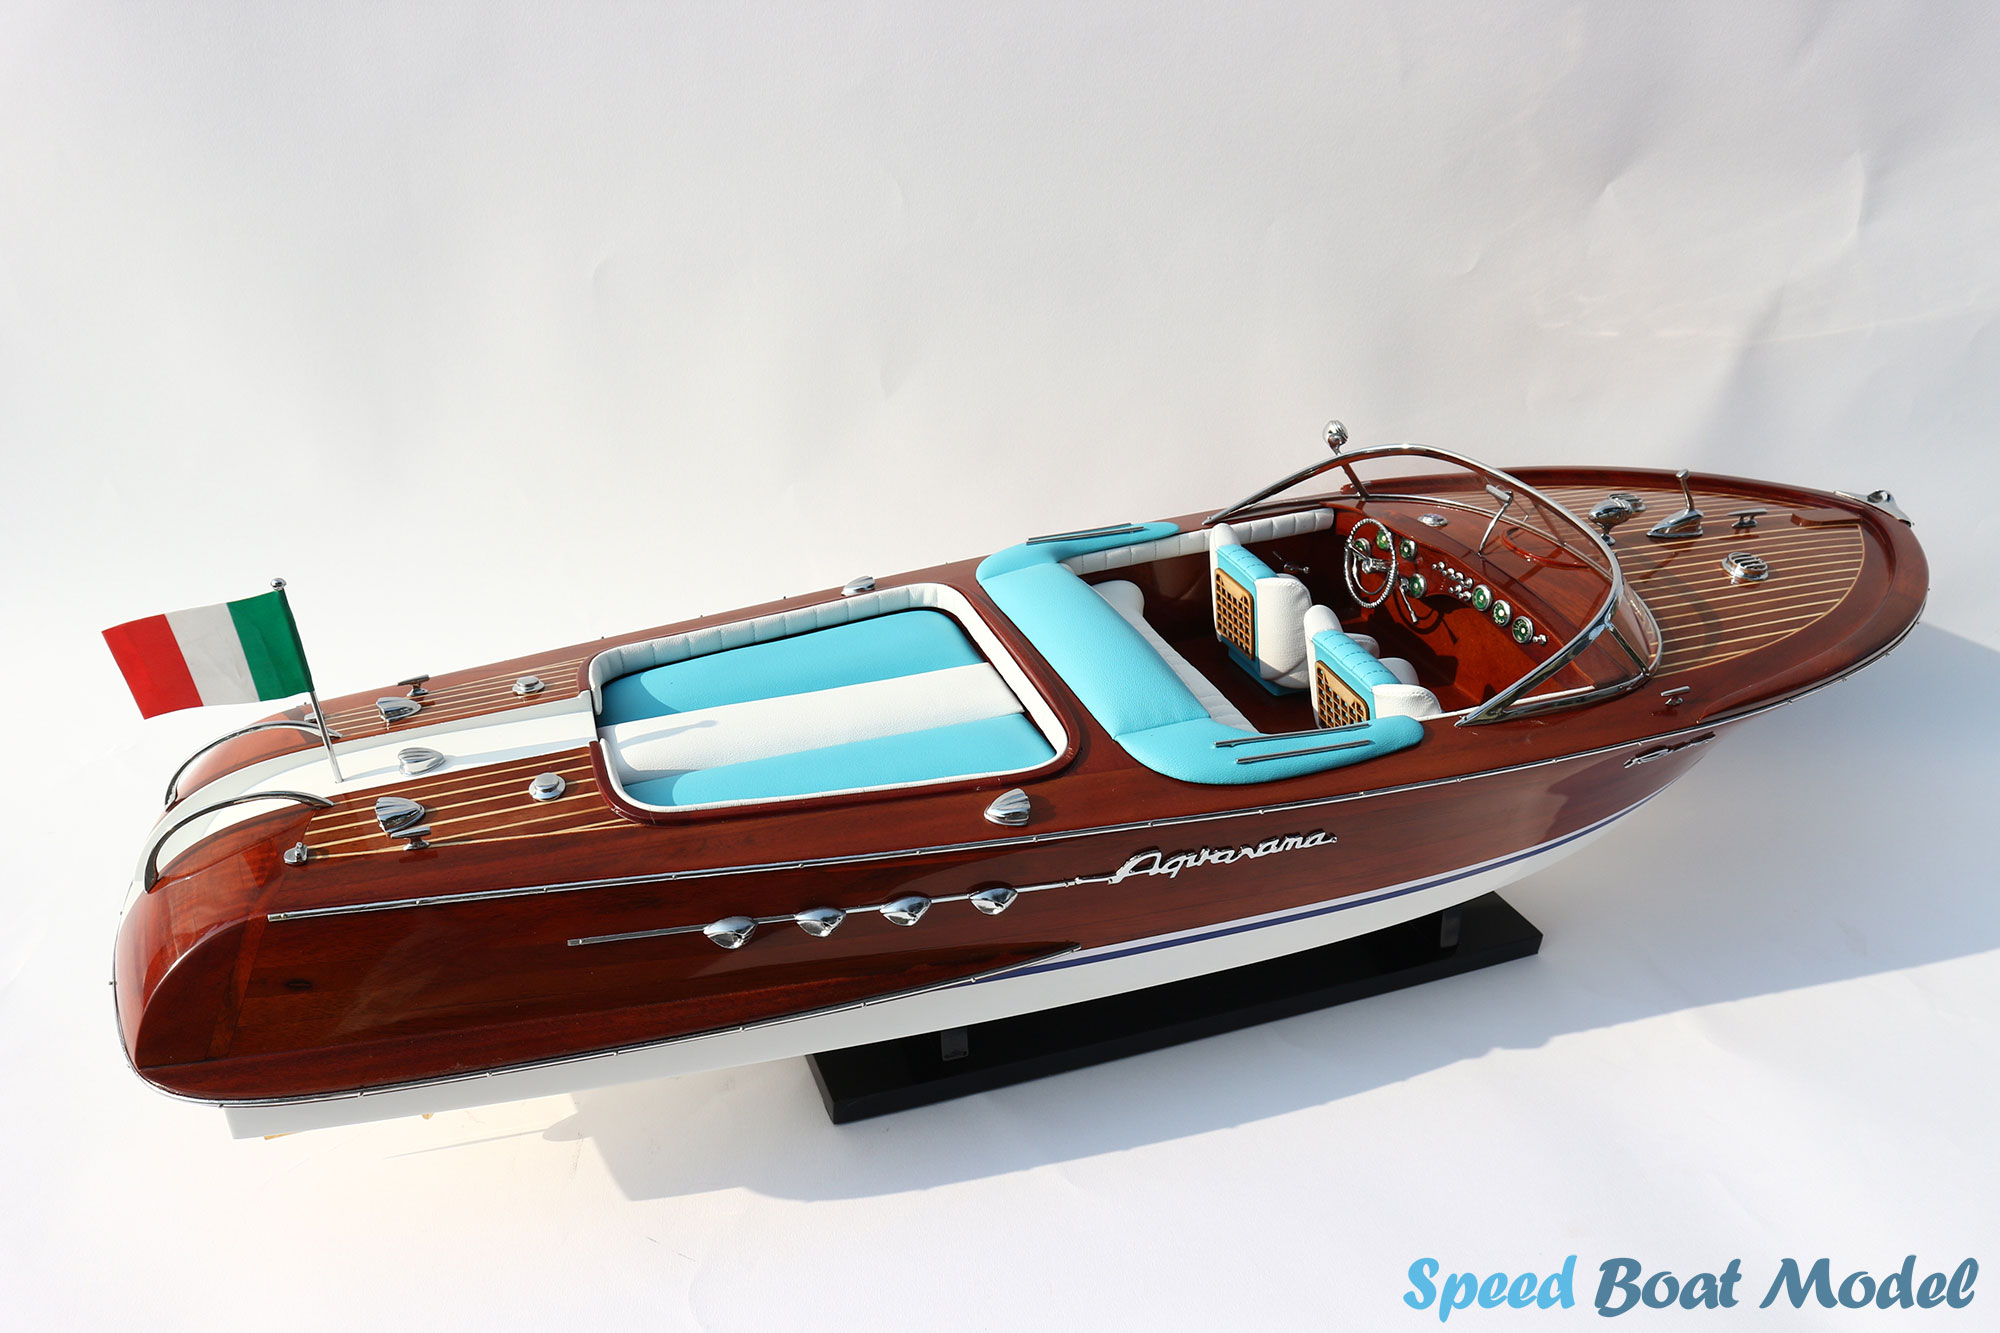 Blue Riva Aquarama Classic Speed Boat Model 34.2"